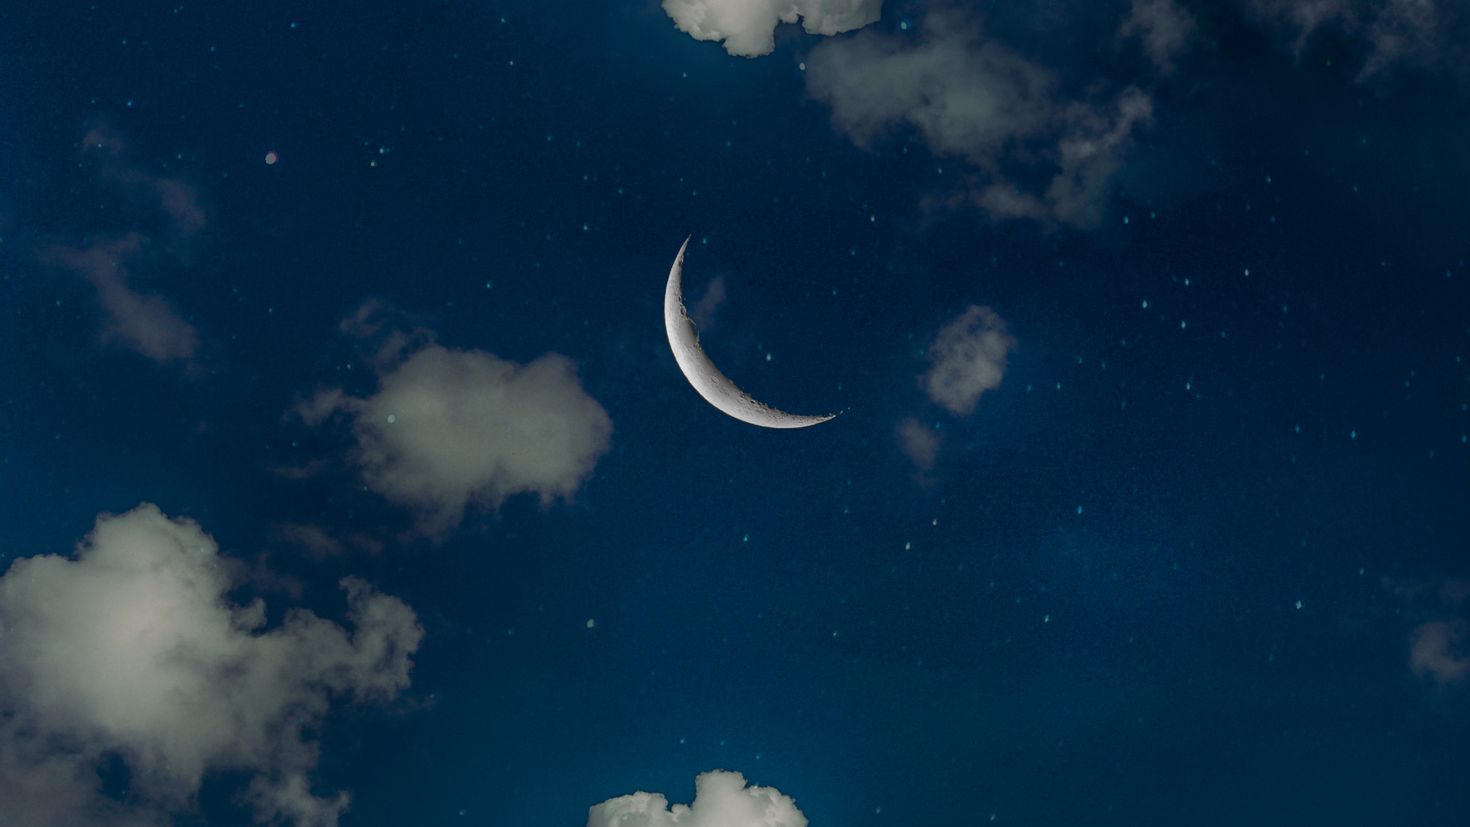 Cs moon. Лунное небо. Ночное небо с луной. Луна на небе. Звездное небо с луной.